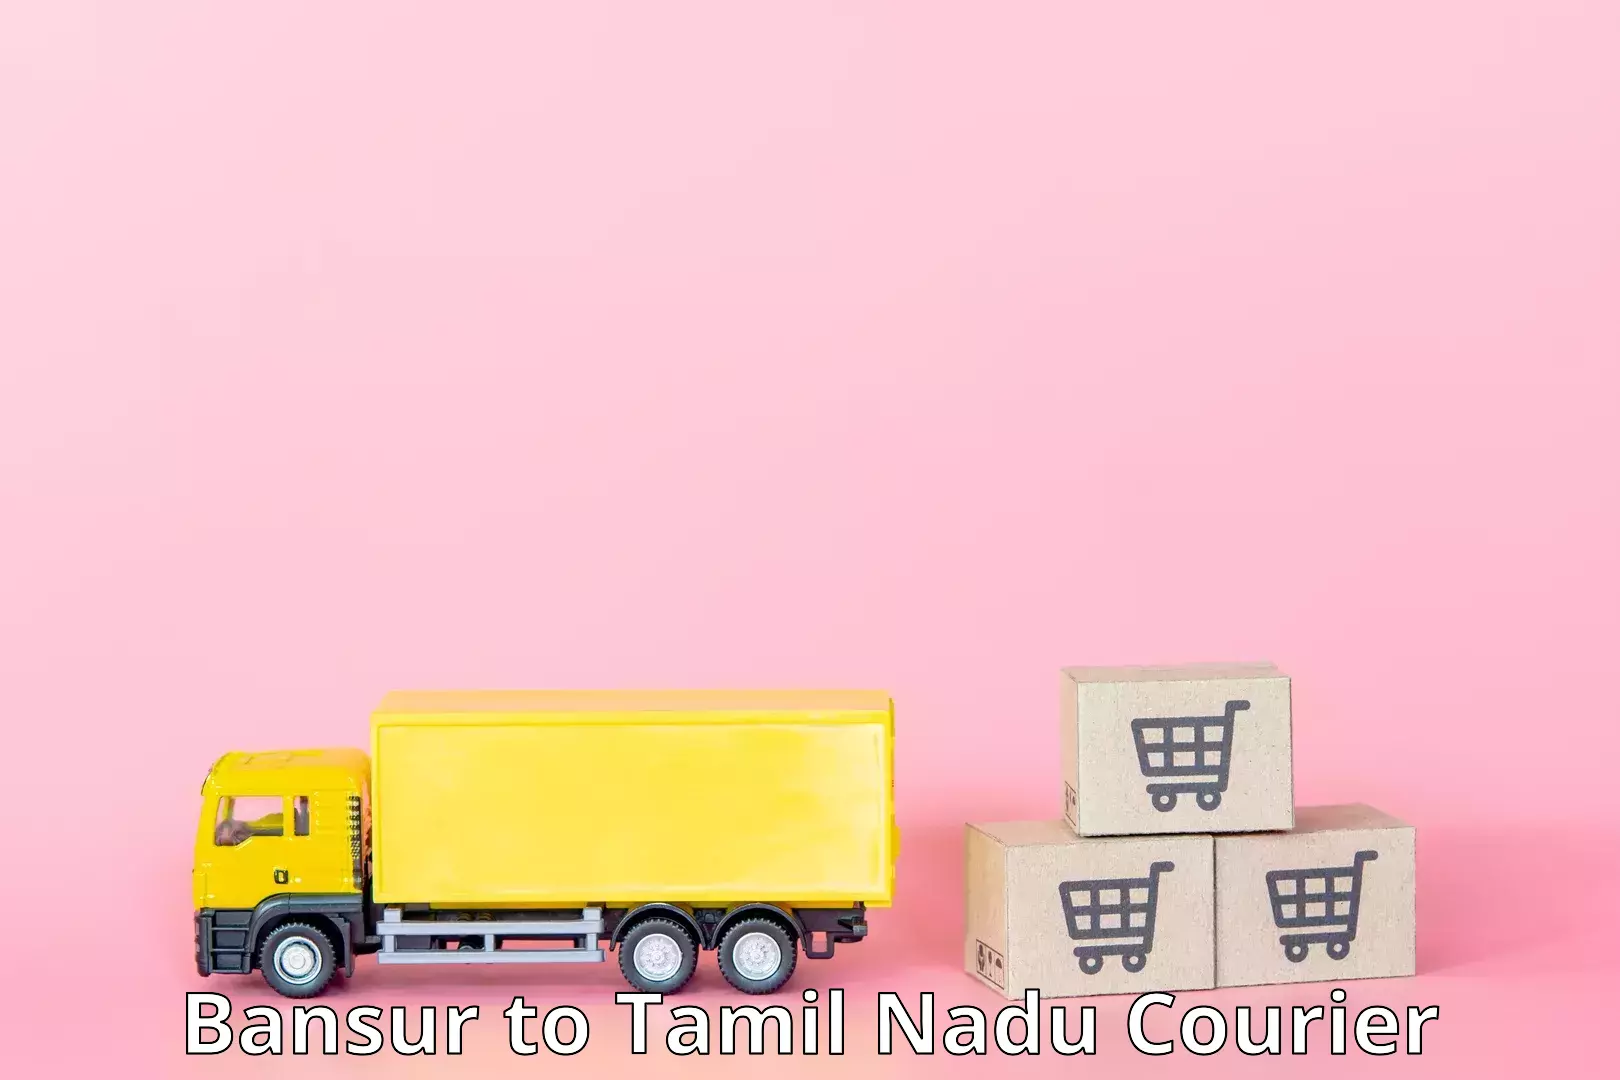 Nationwide delivery network Bansur to Tamil Nadu